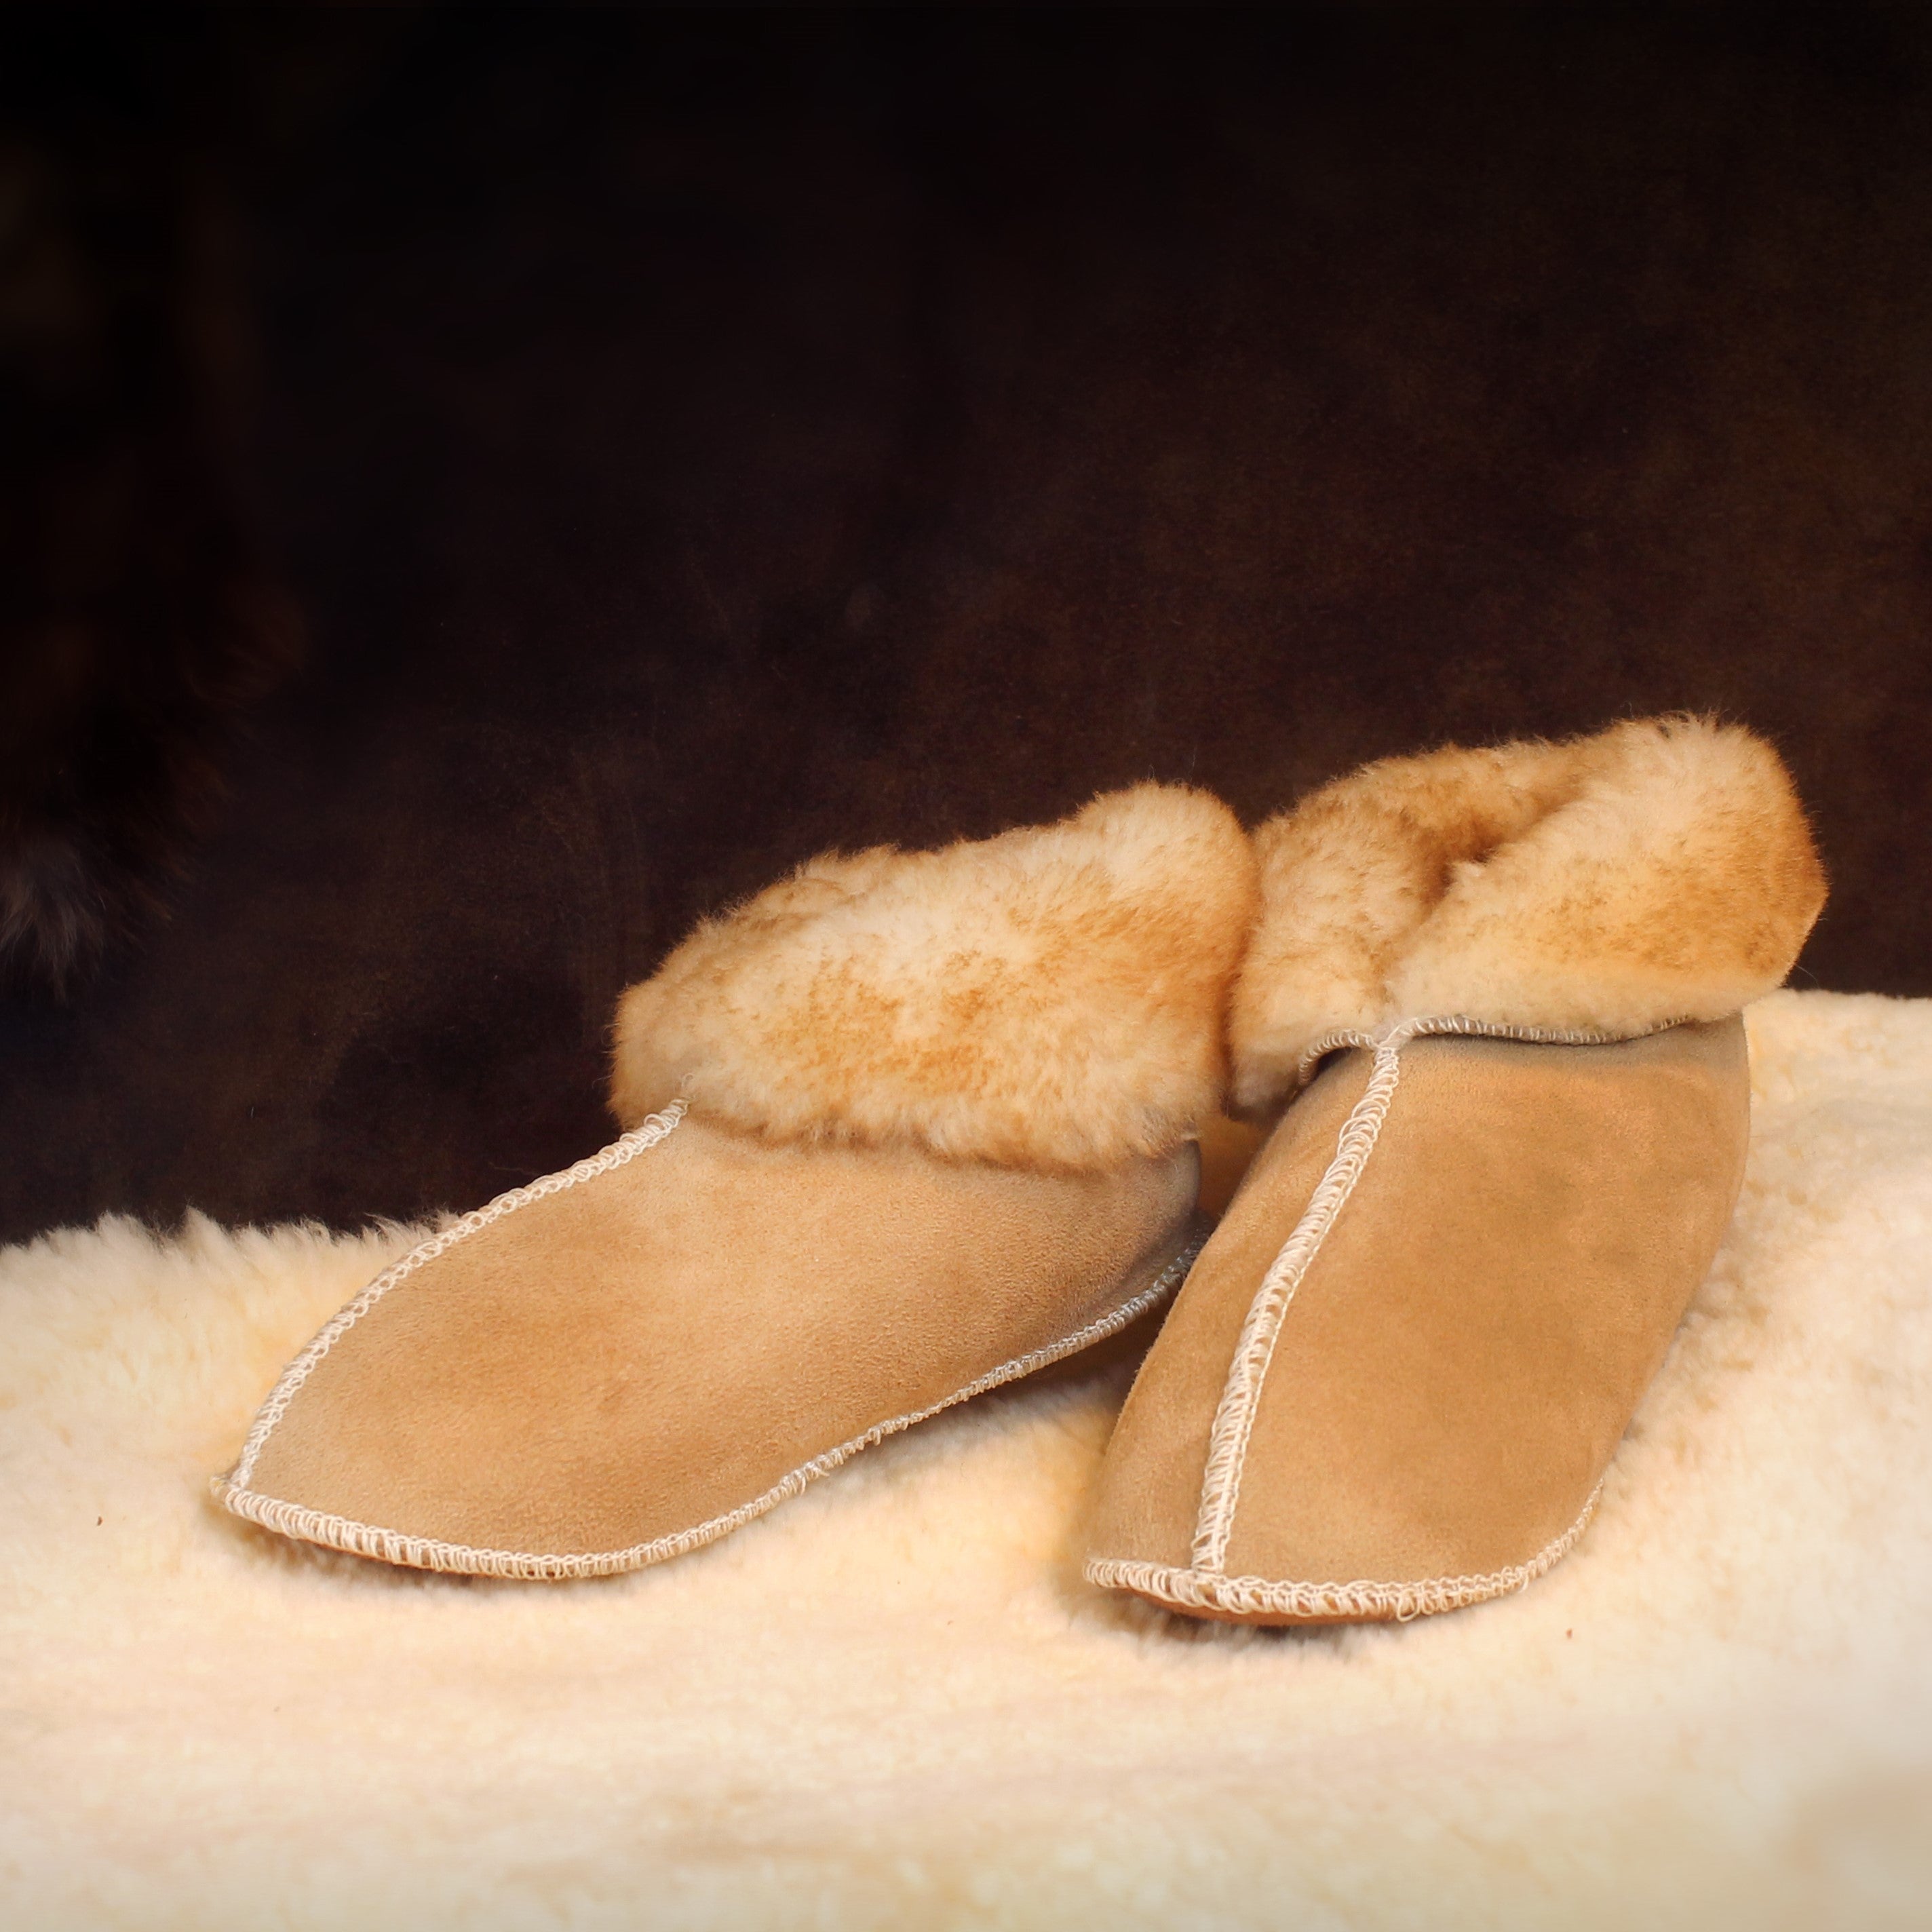 just sheepskin childrens slippers